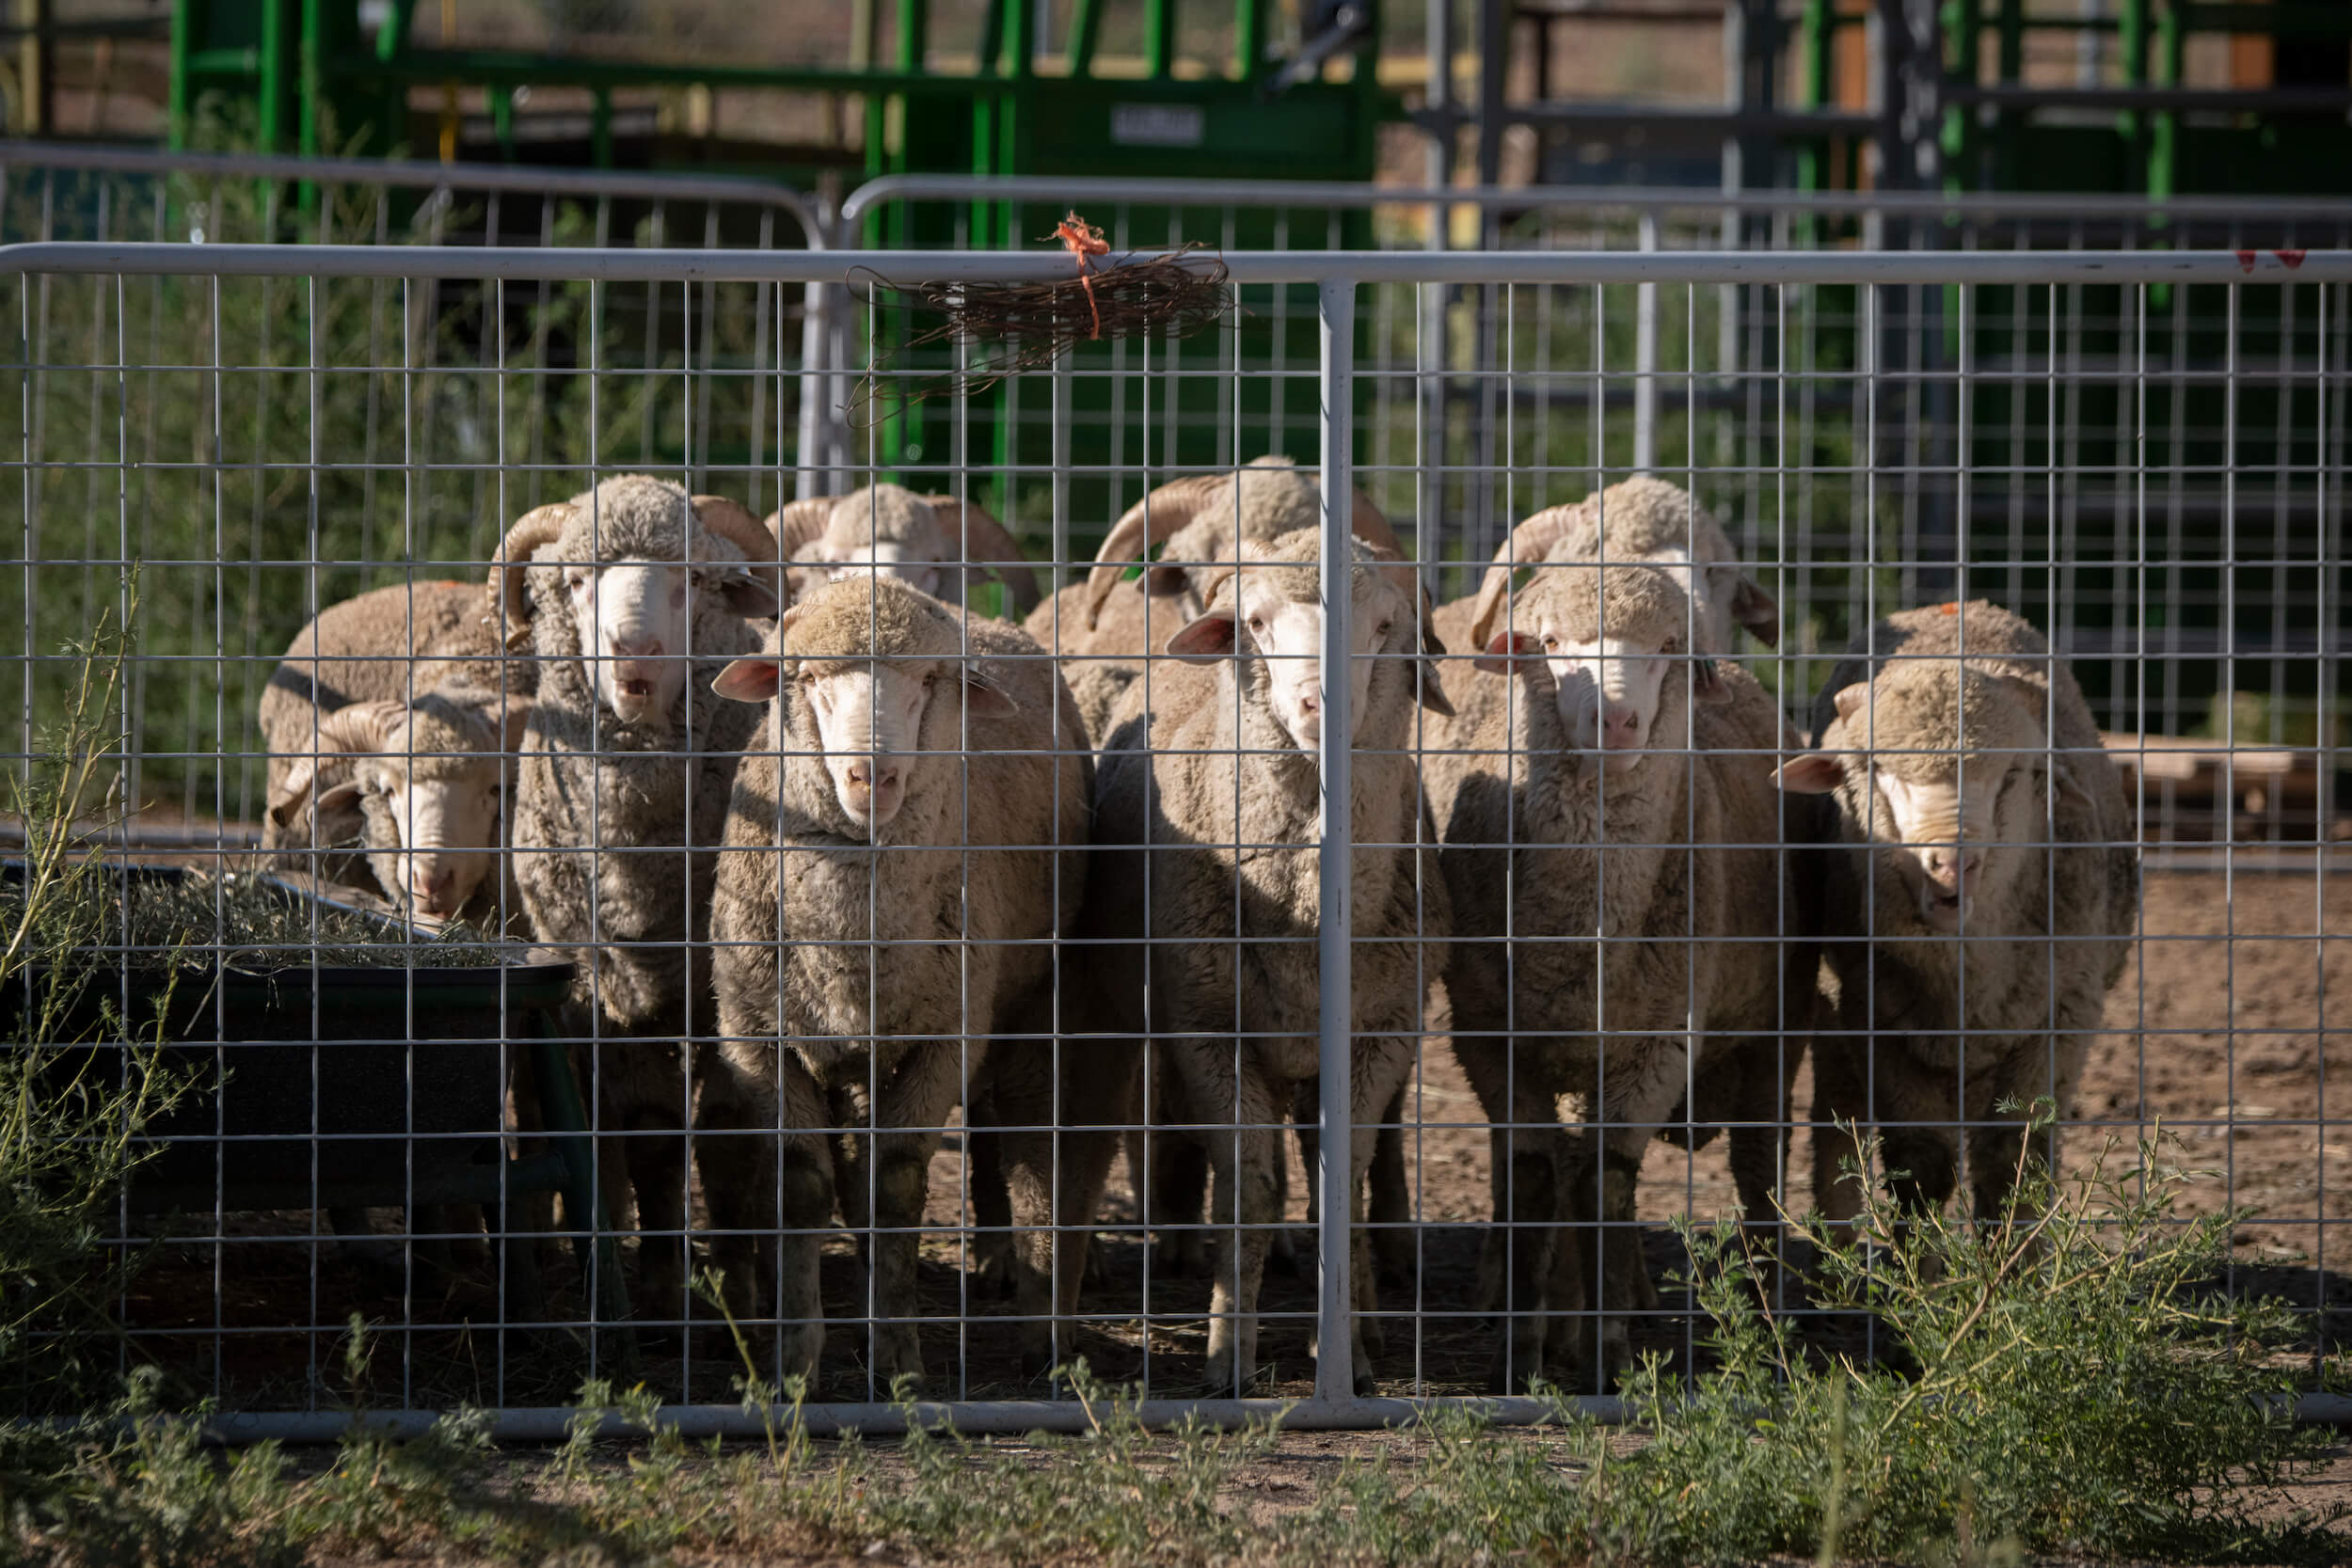 USDA lab sheep